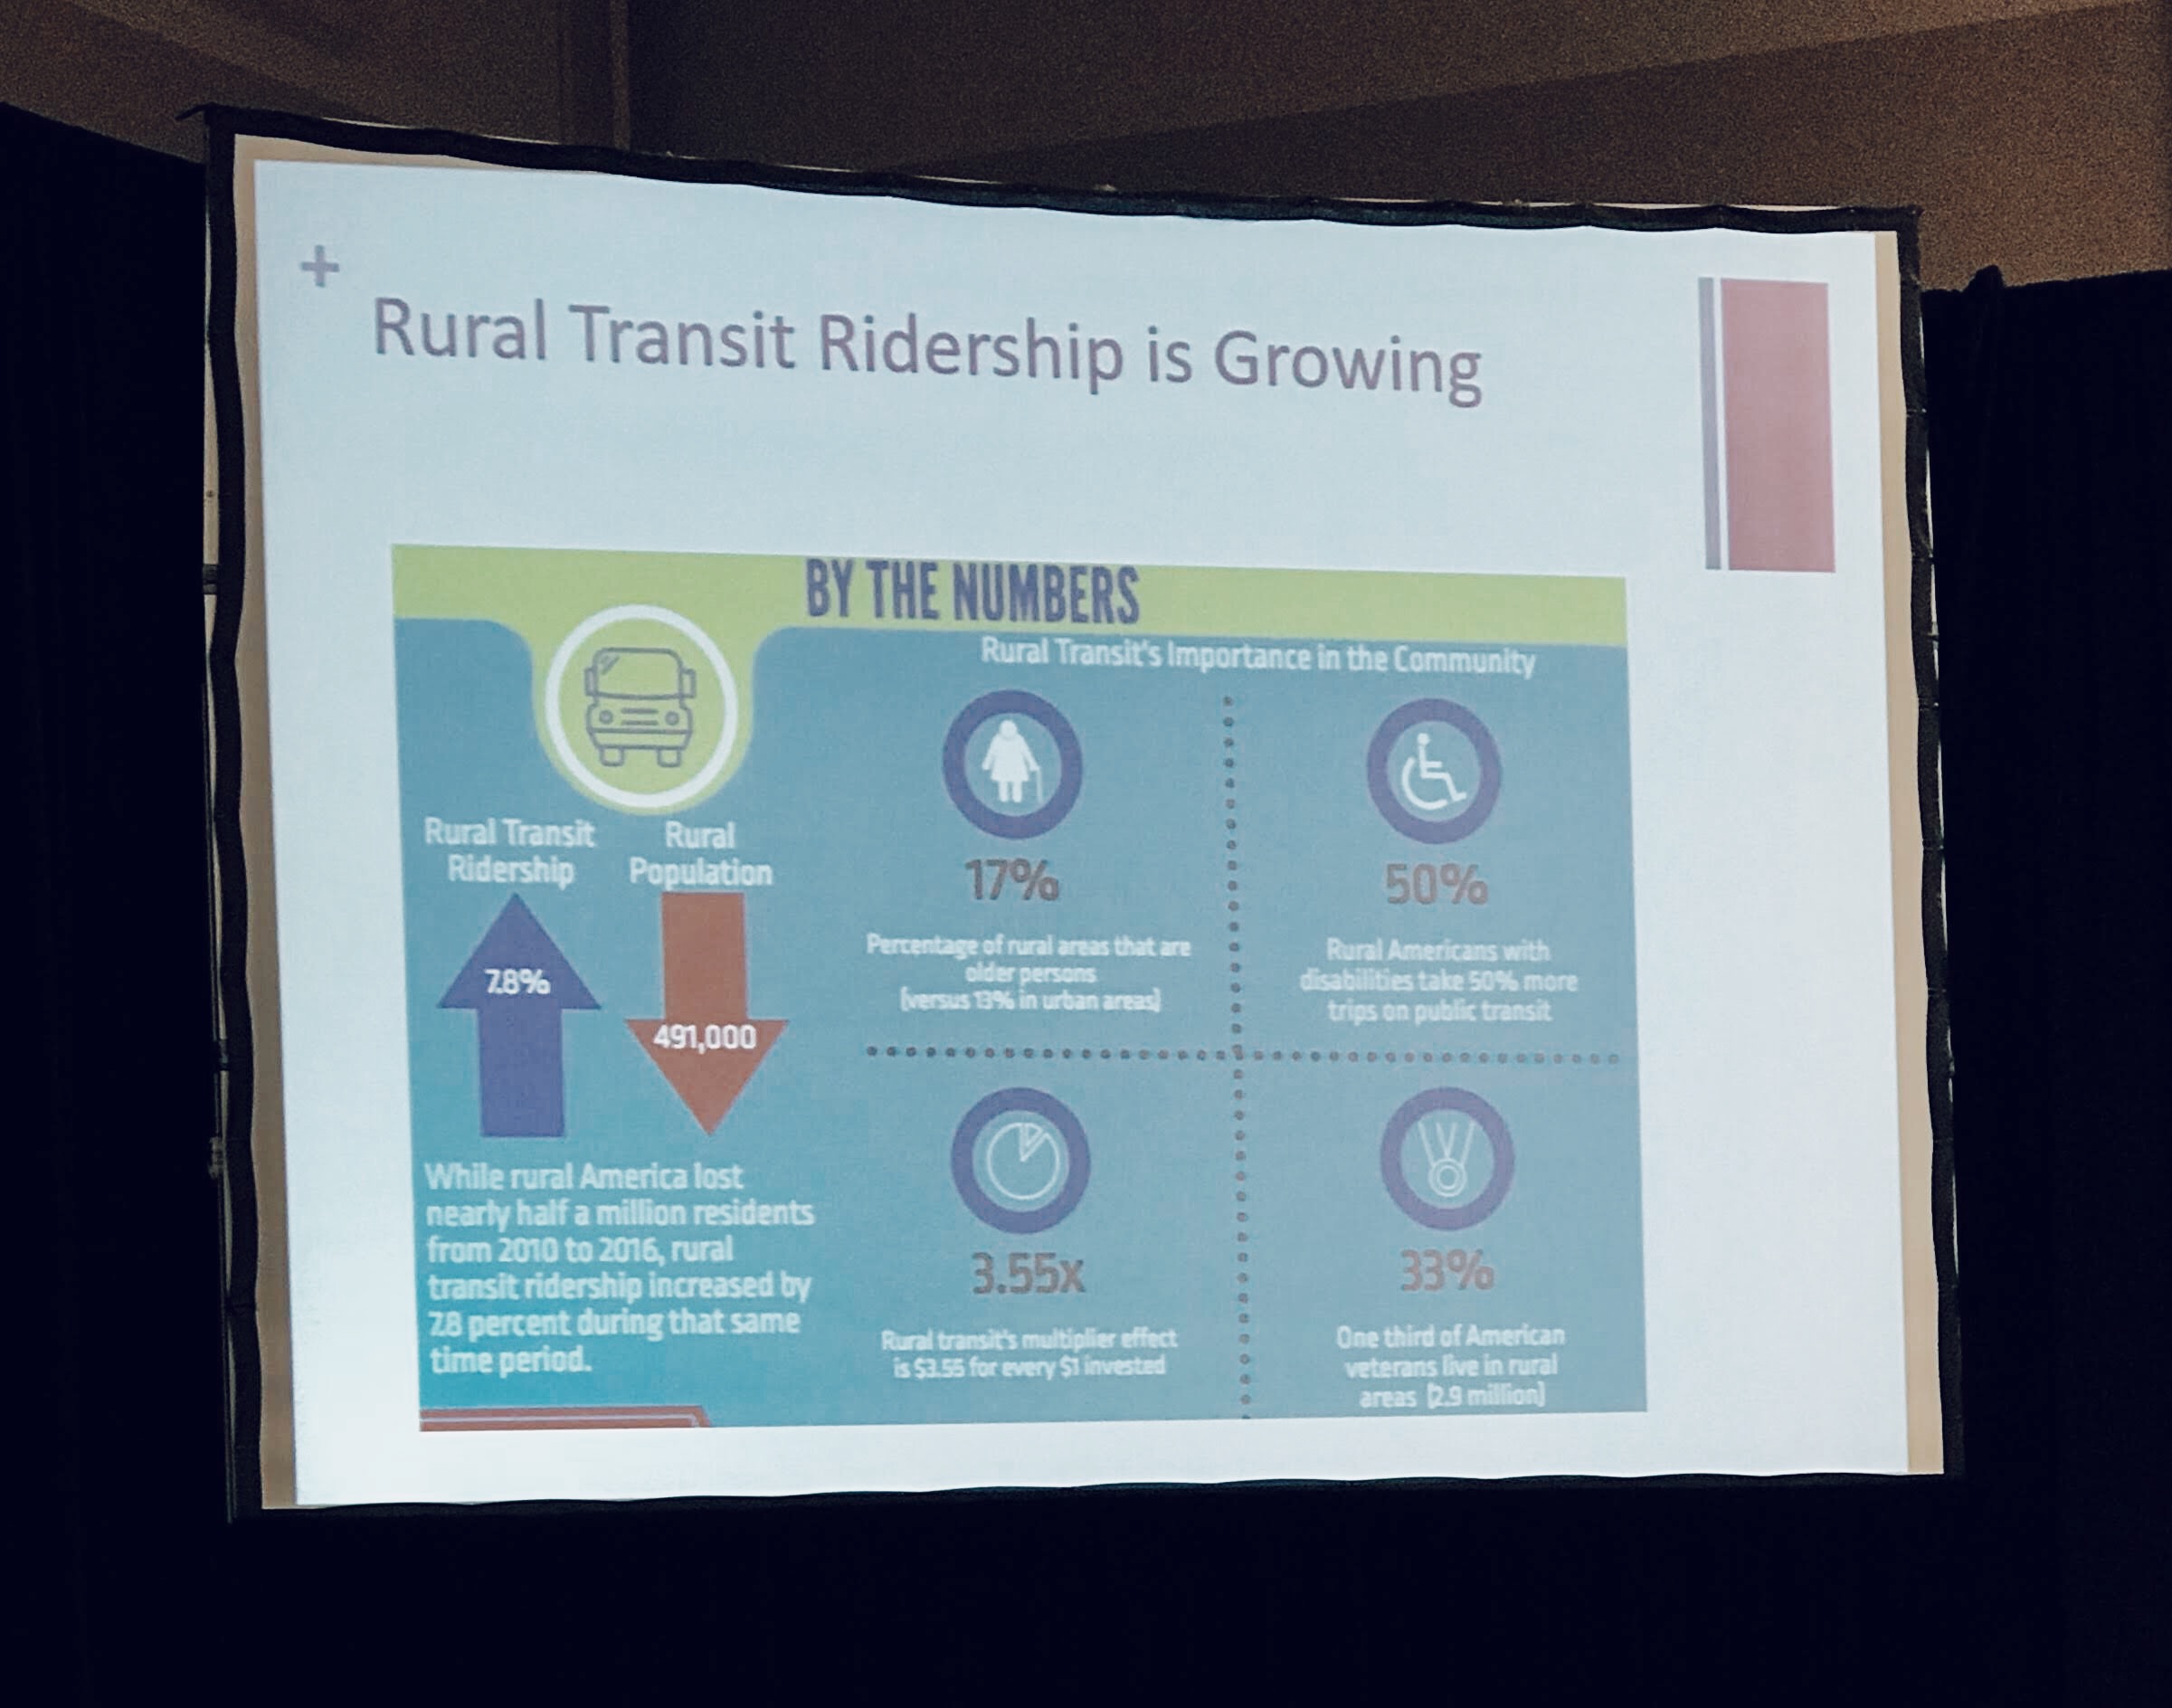 Rural transit usage continues to grow despite decline in rural population.